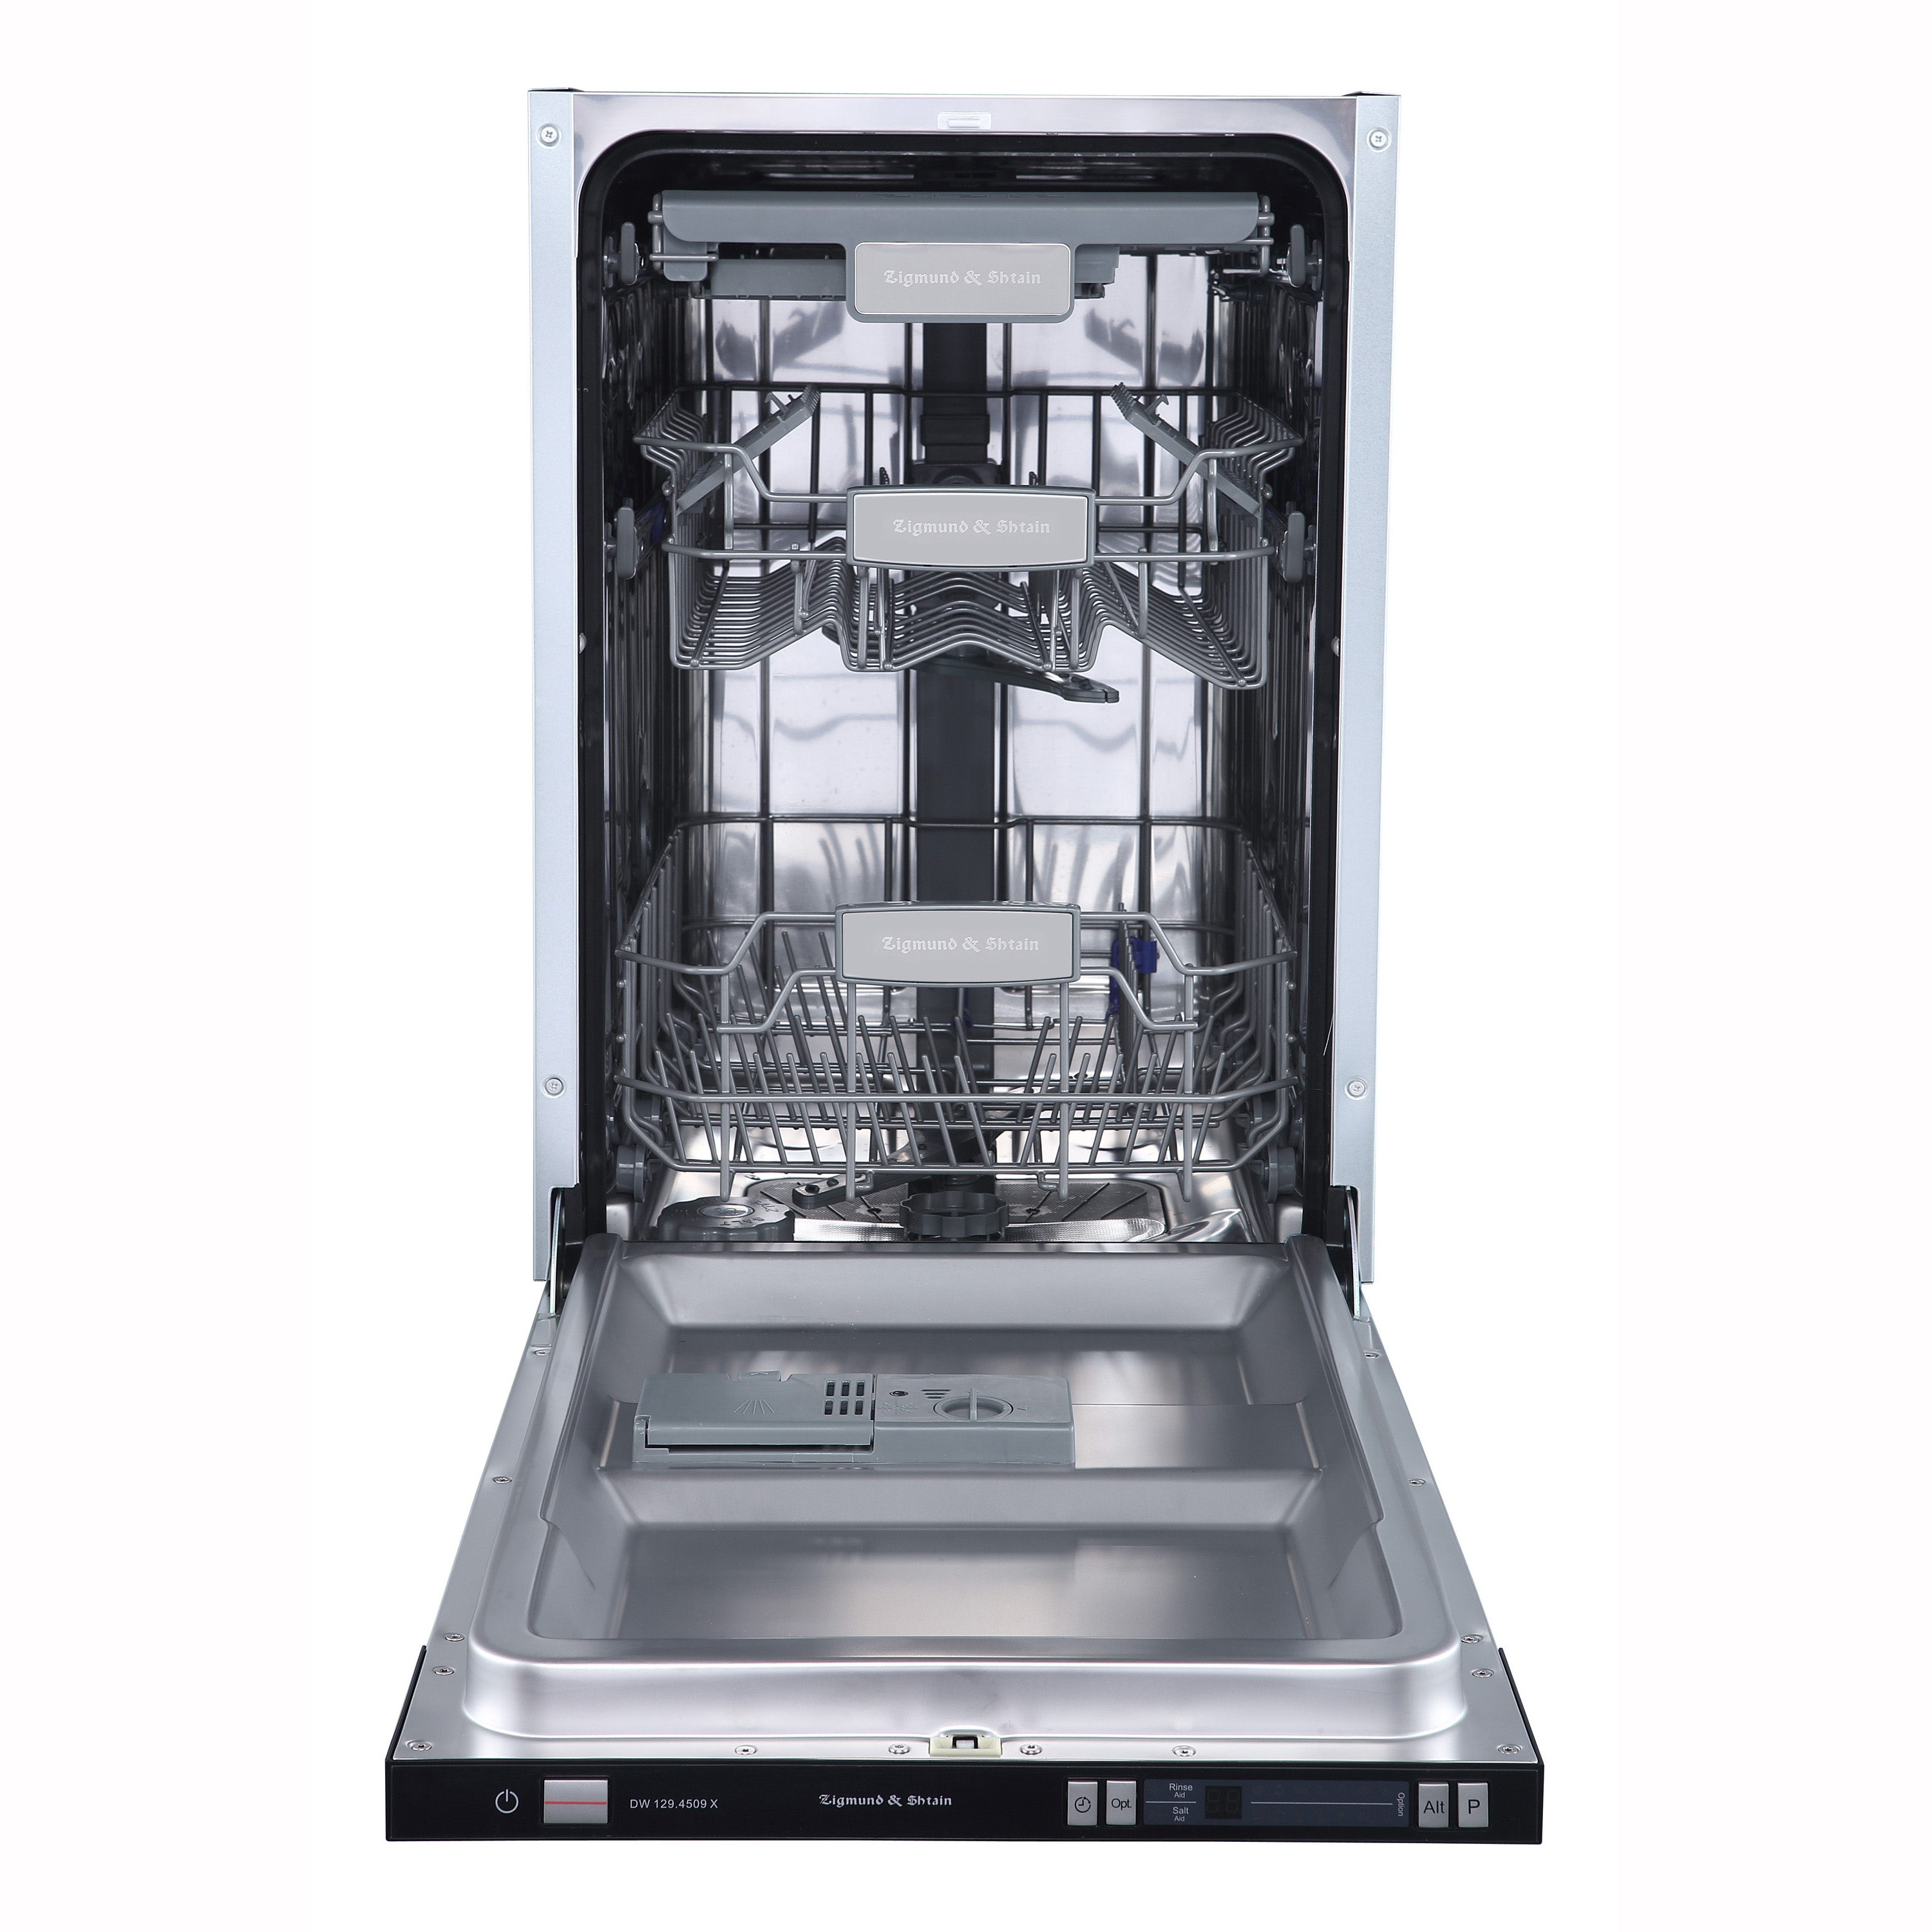 Встраиваемая посудомоечная машина Zigmund & Shtain DW 129.4509 X встраиваемая посудомоечная машина beko bdin16520q